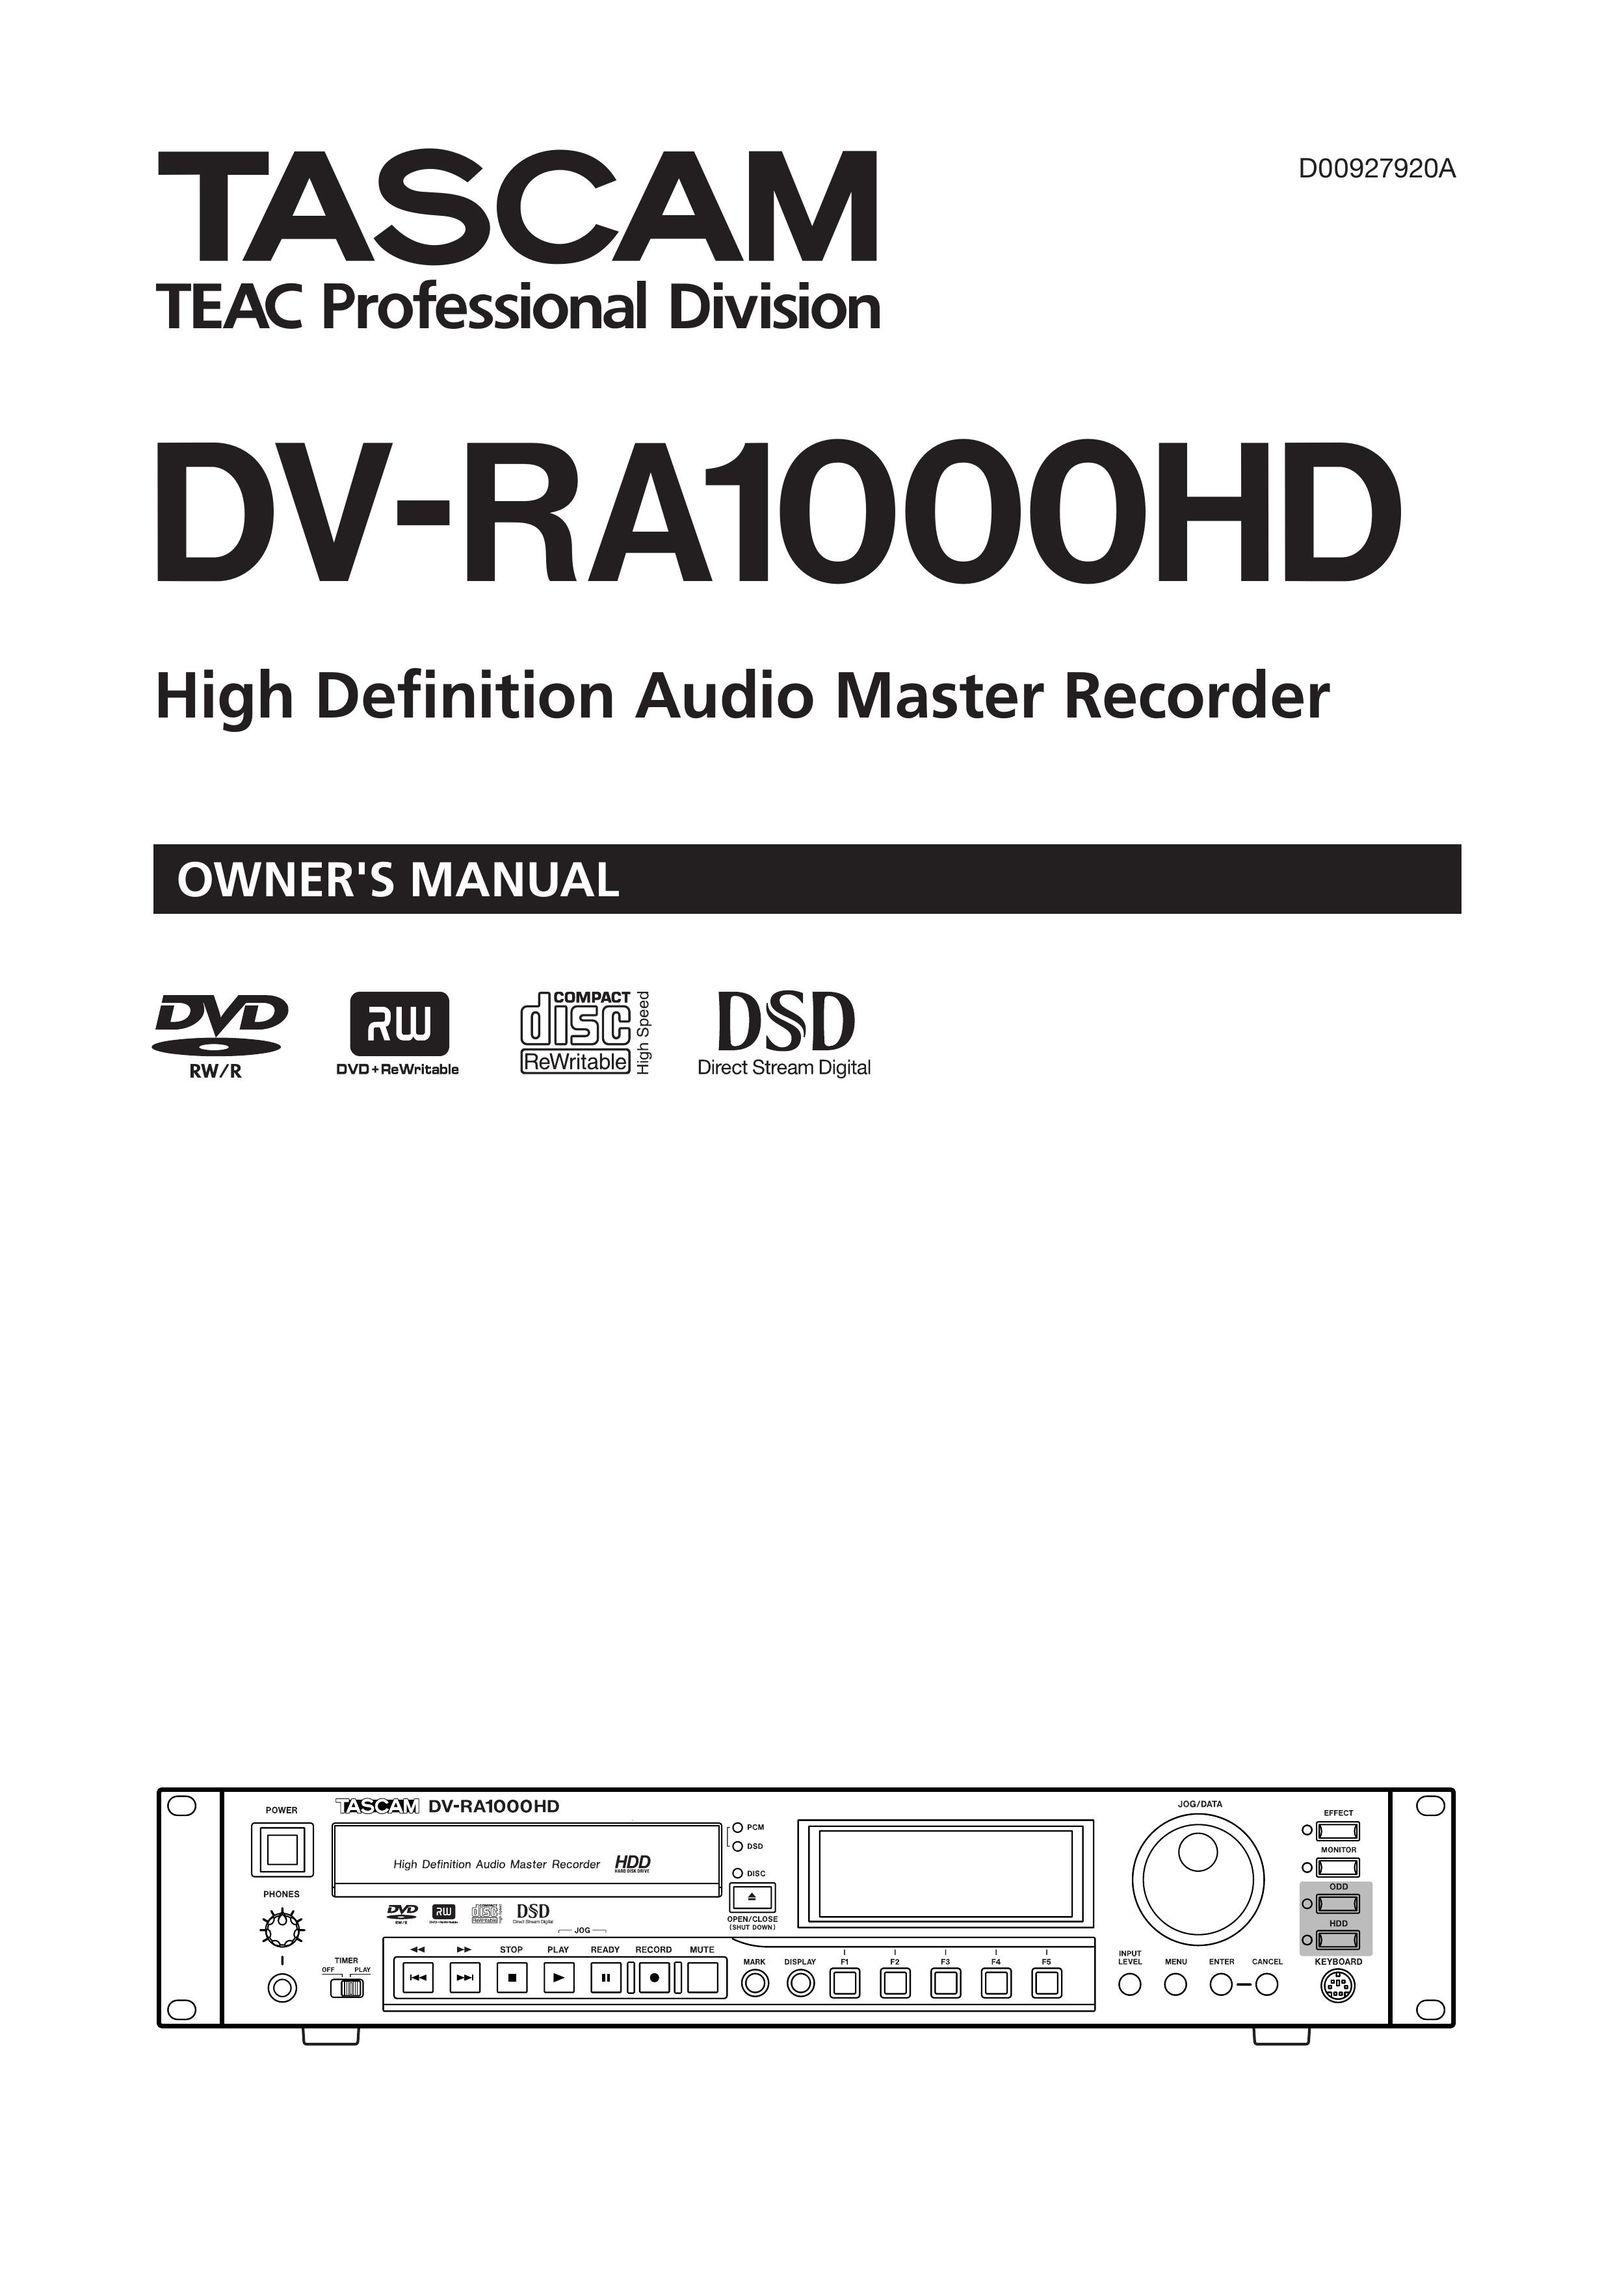 Tascam DV-RA1000HD DVD Recorder User Manual